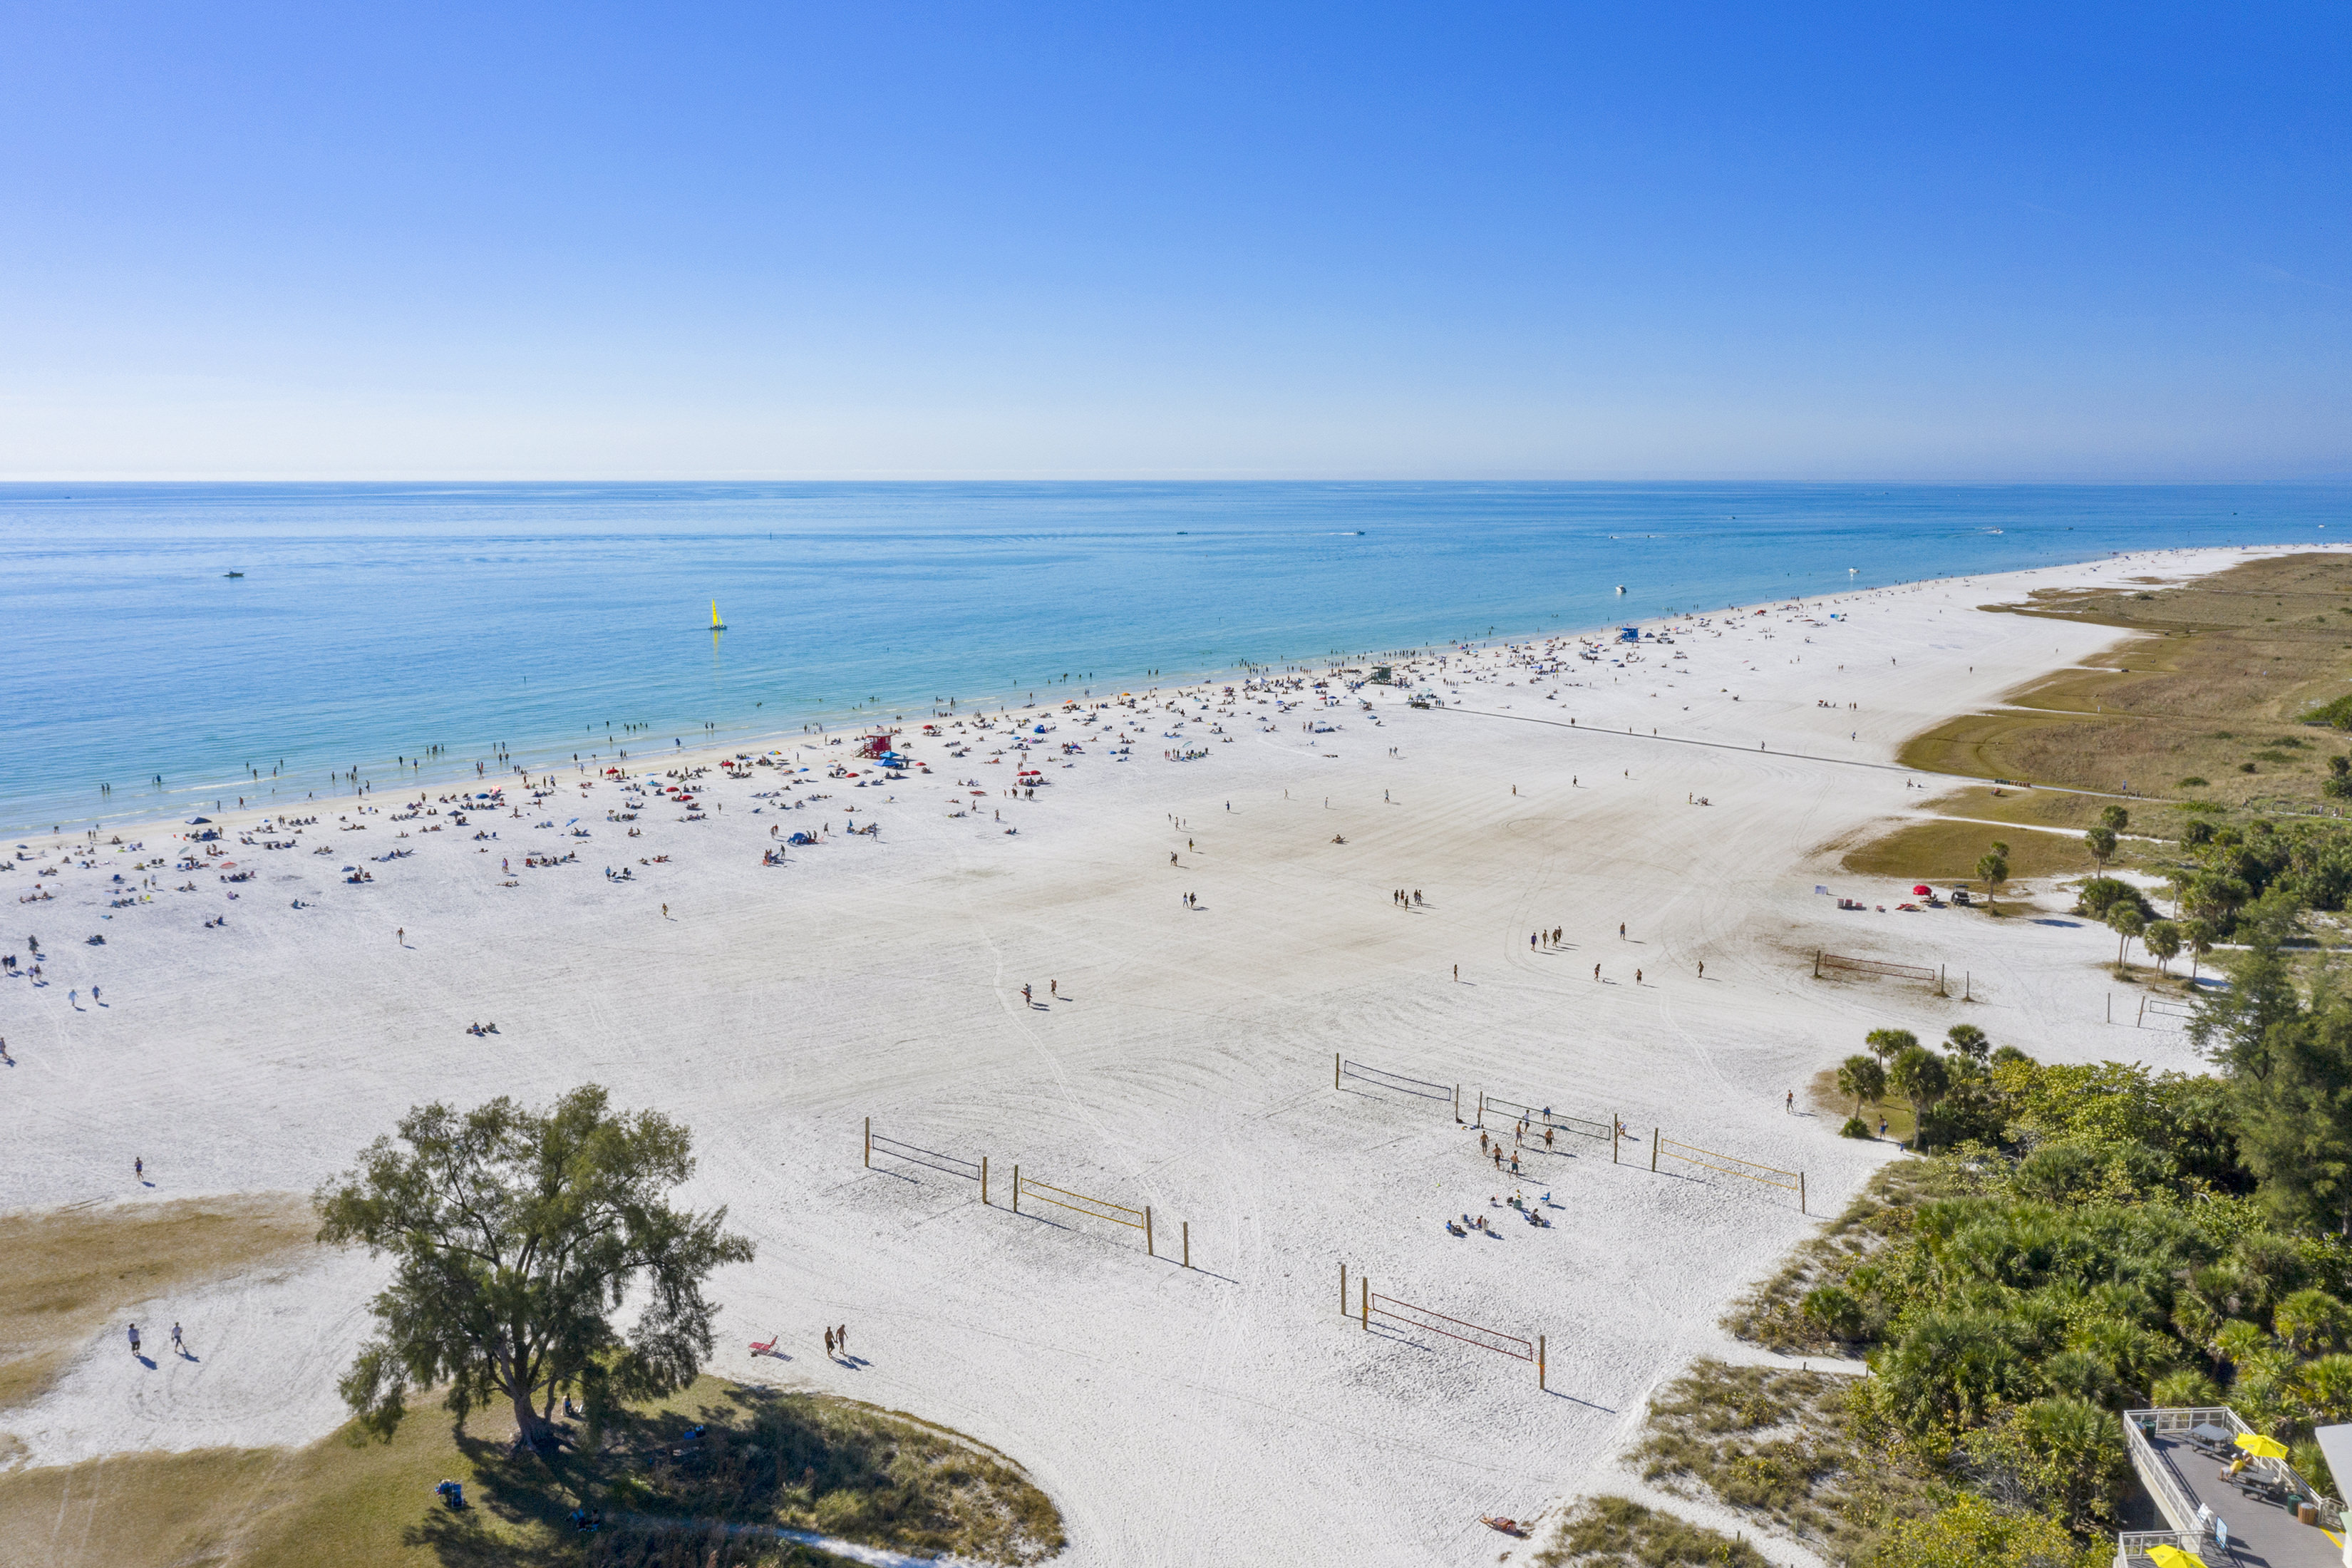 Near some of Florida's most pristine beaches